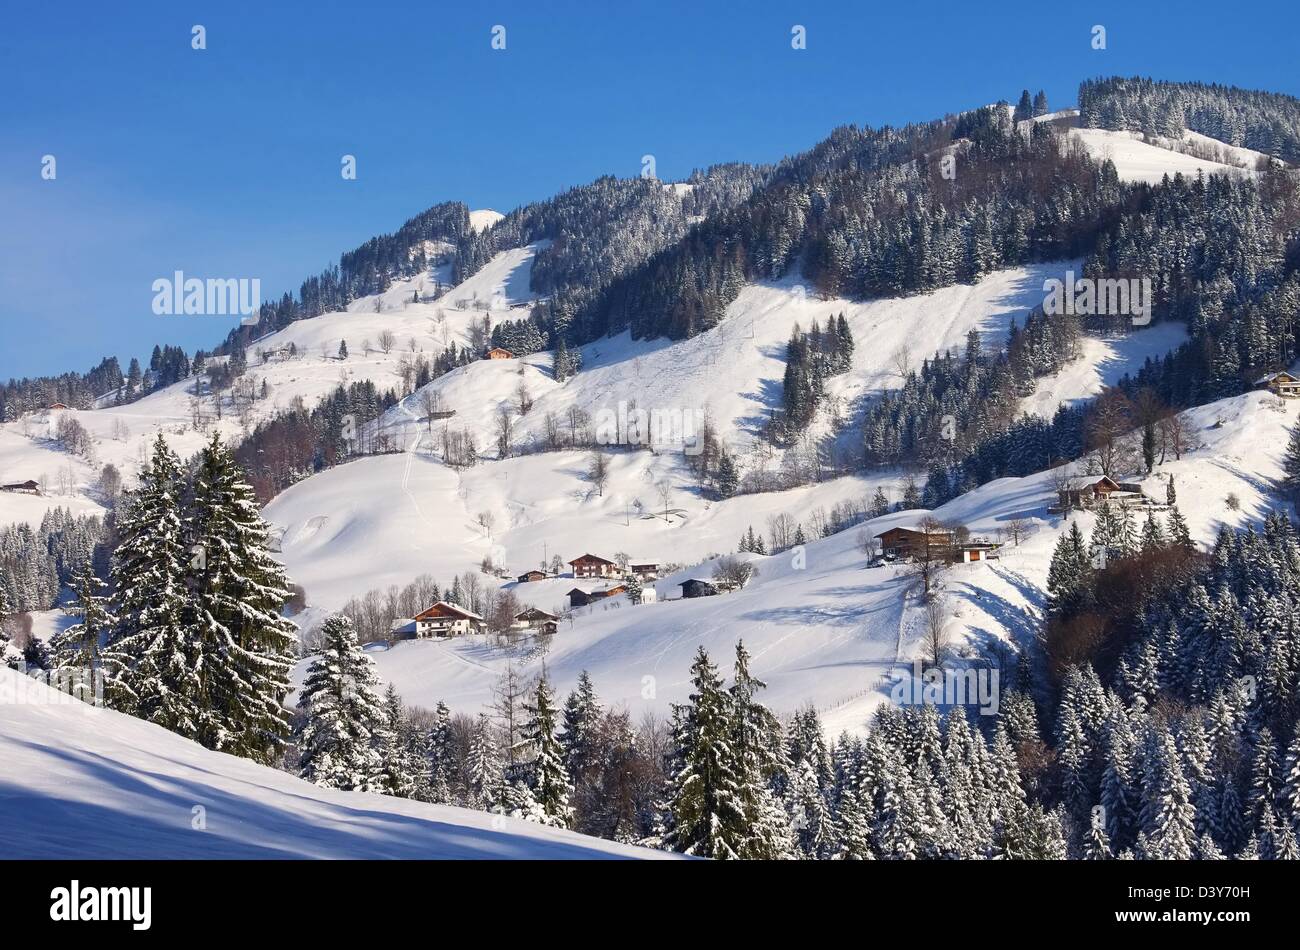 Alpen im Winter - Alps mountains in winter 01 Stock Photo